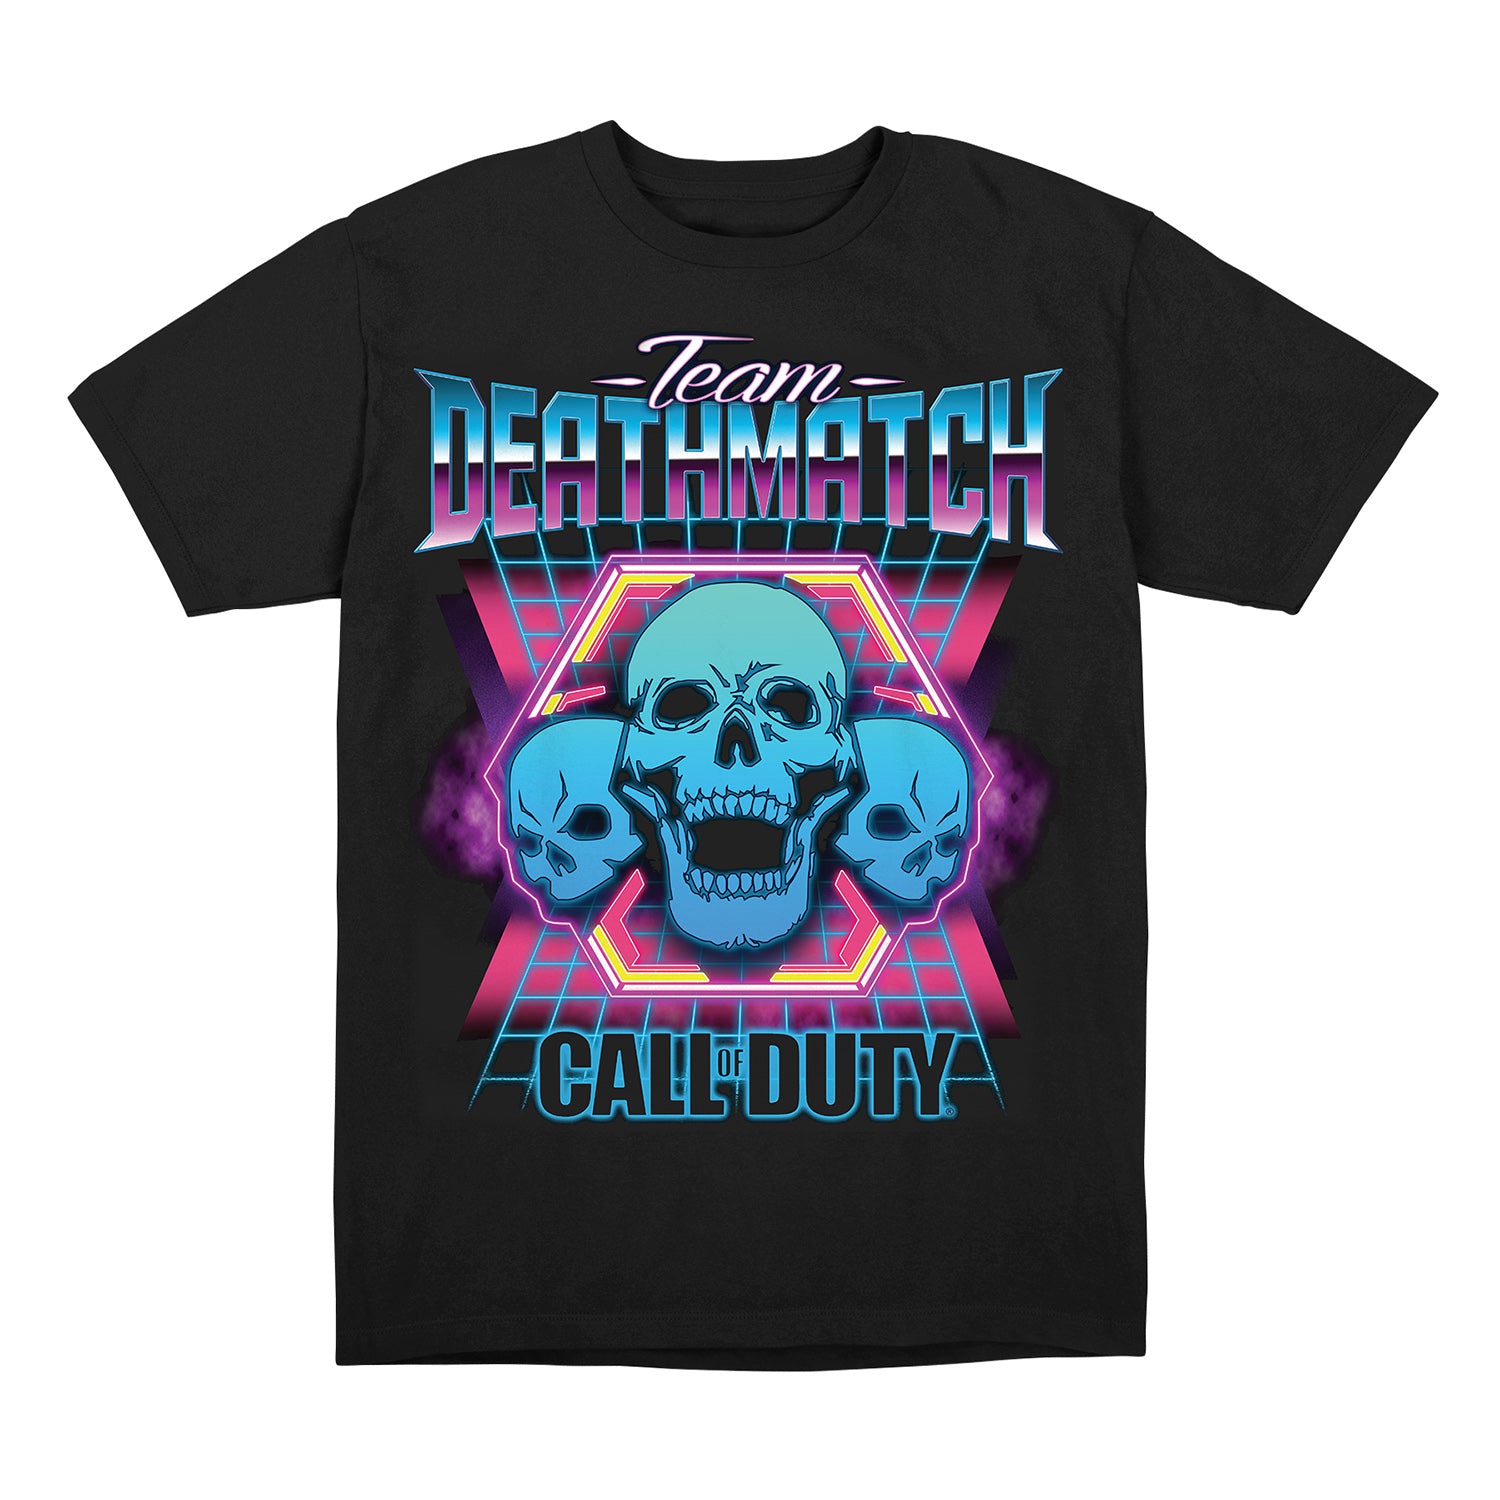 Call of Duty Team Deathmatch Arcade Black T-Shirt - Call of Duty Store